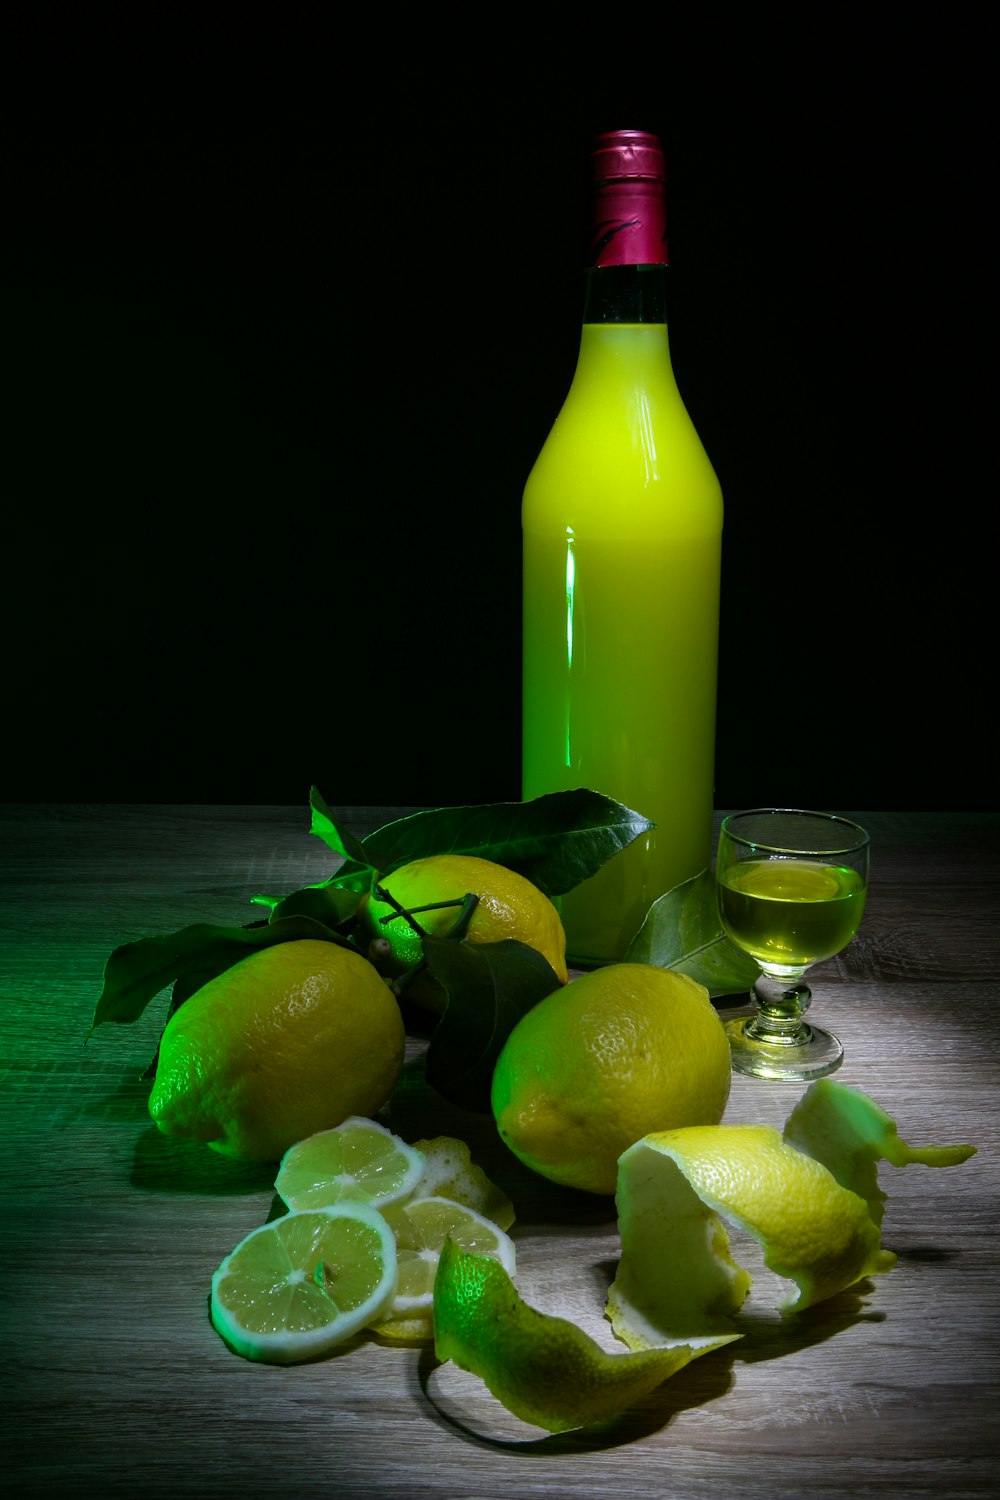 lemon fruits and yellow glass bottle